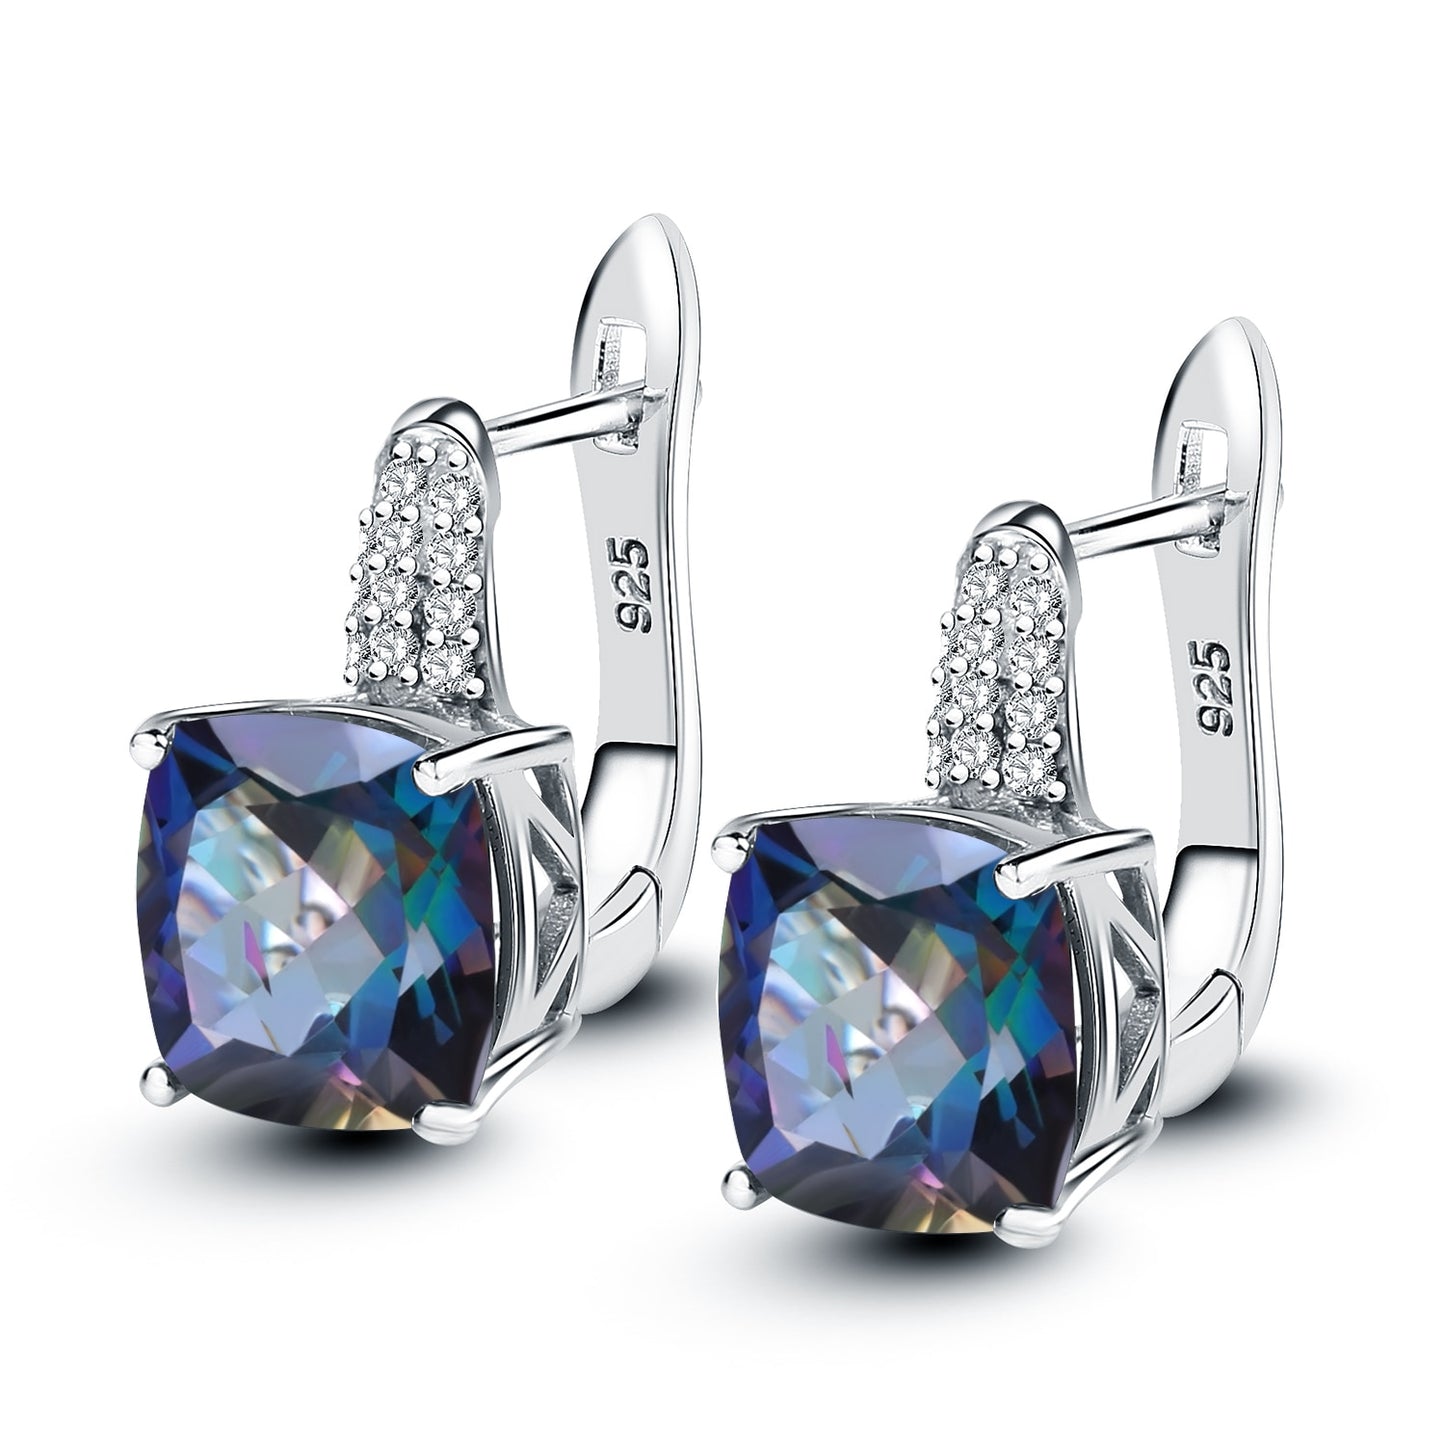 GEM'S BALLET 7.33Ct Natural Blueish Mystic Quartz 925 Sterling Silver Vintge Gemstone Stud Earrings for Women Fine Jewelry Mystic Quartz China